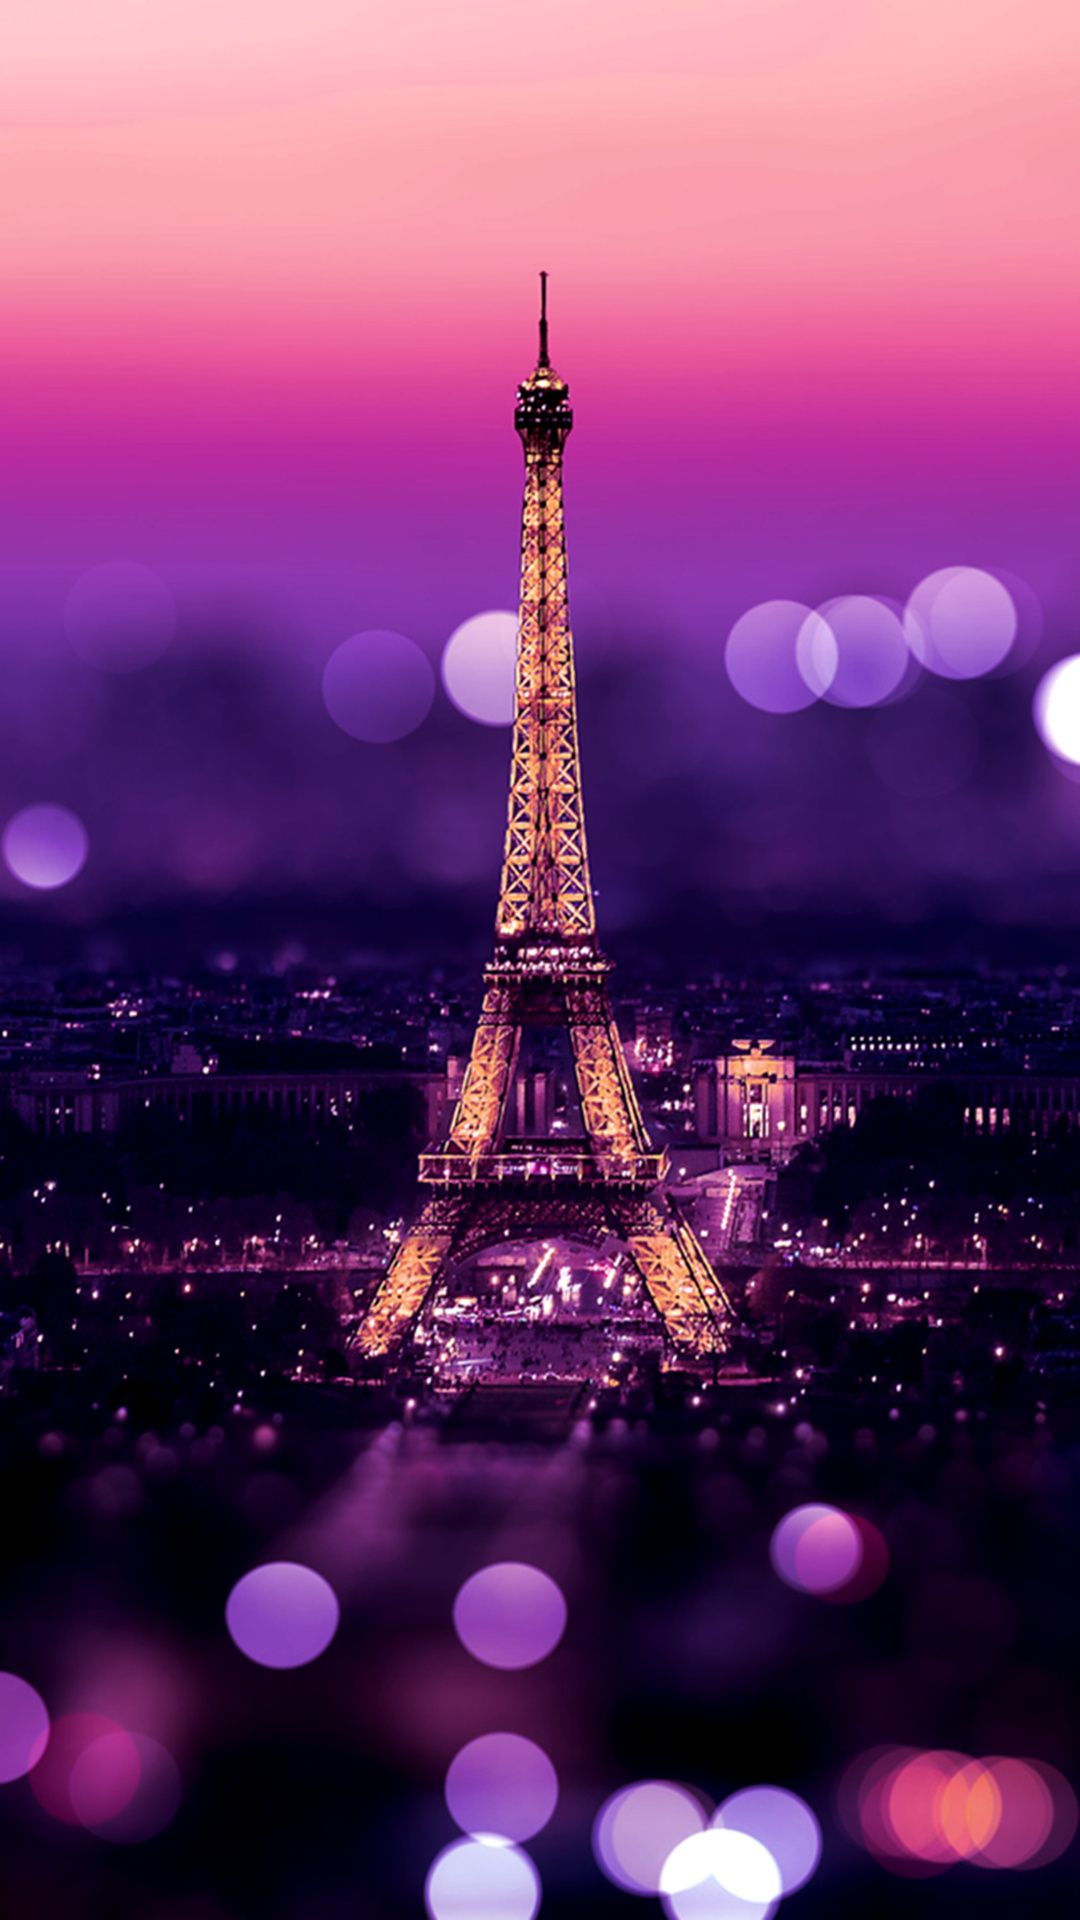 1080x1920 wallpaper | Eiffel tower, Paris wallpaper, Eiffel